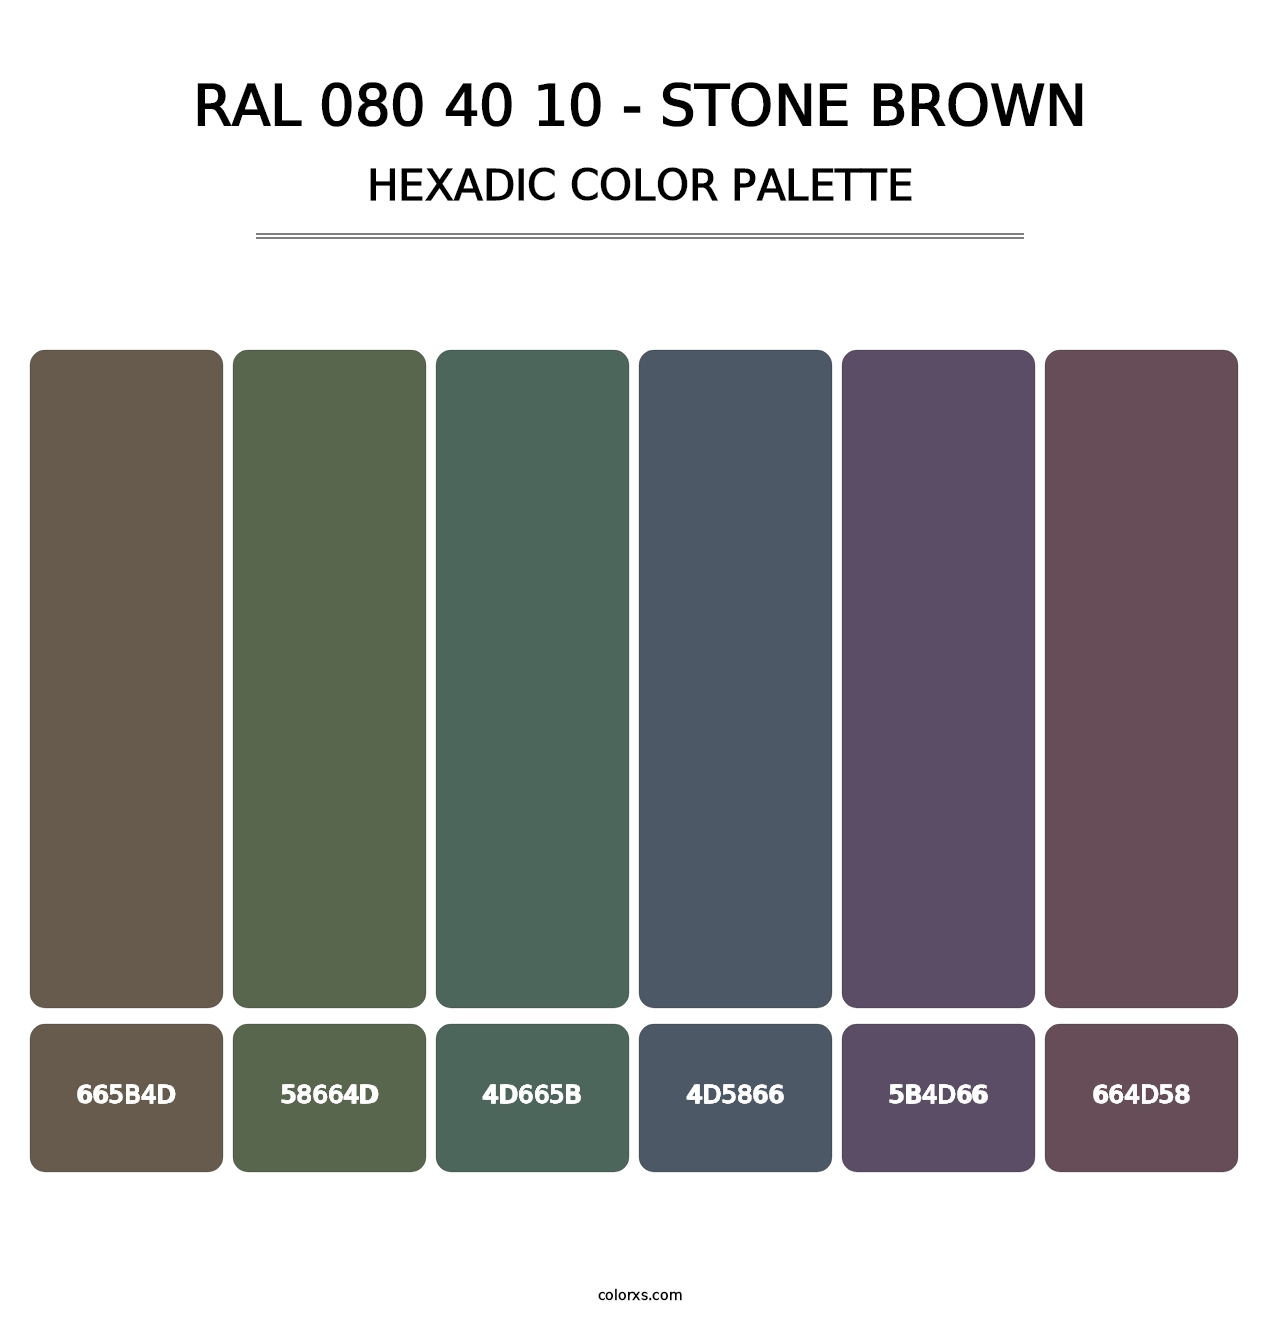 RAL 080 40 10 - Stone Brown - Hexadic Color Palette